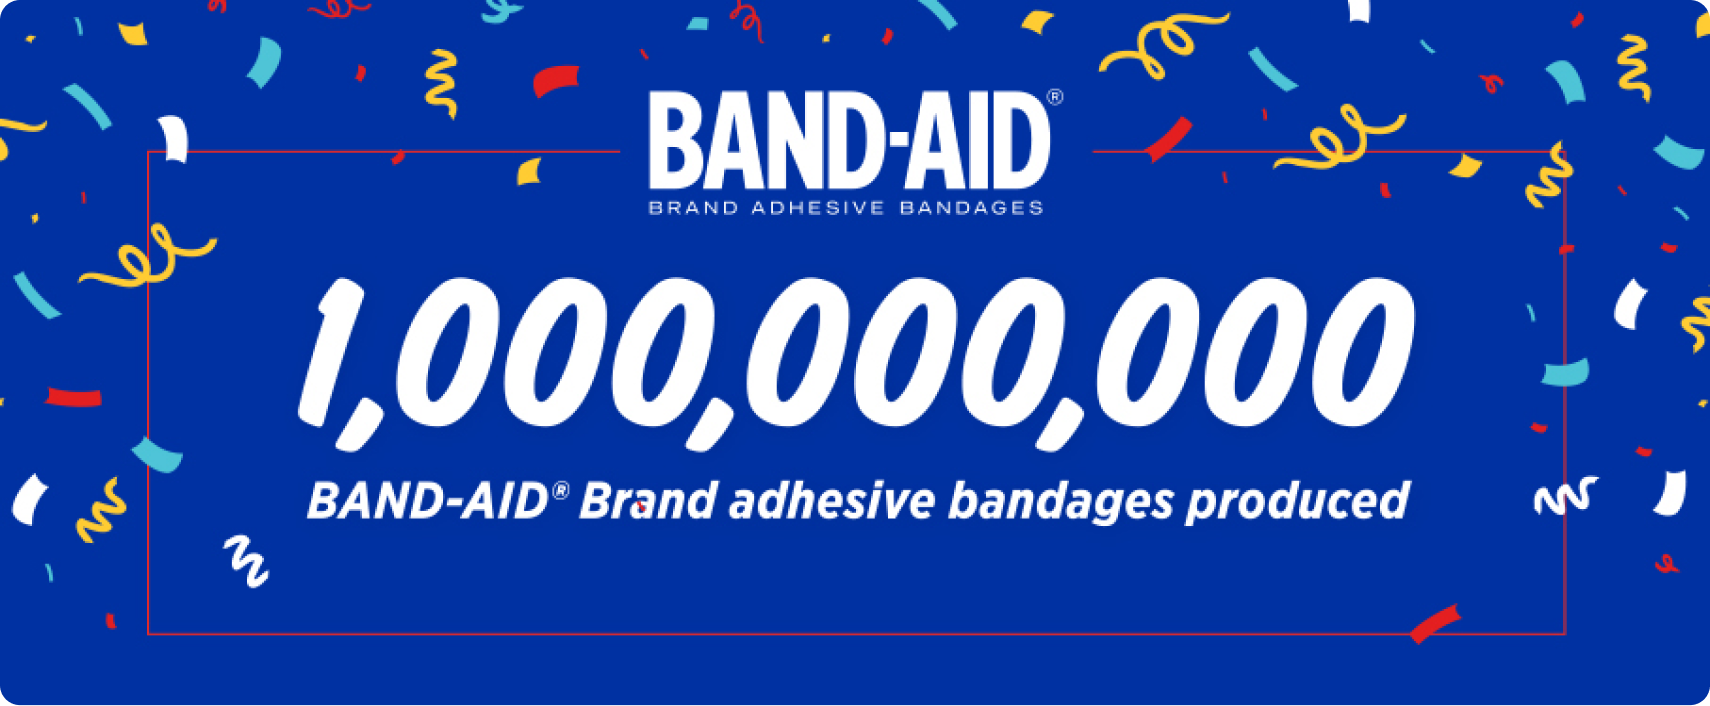 Banner celebrating one-billionth BAND-AID® Brand adhesive bandages produced